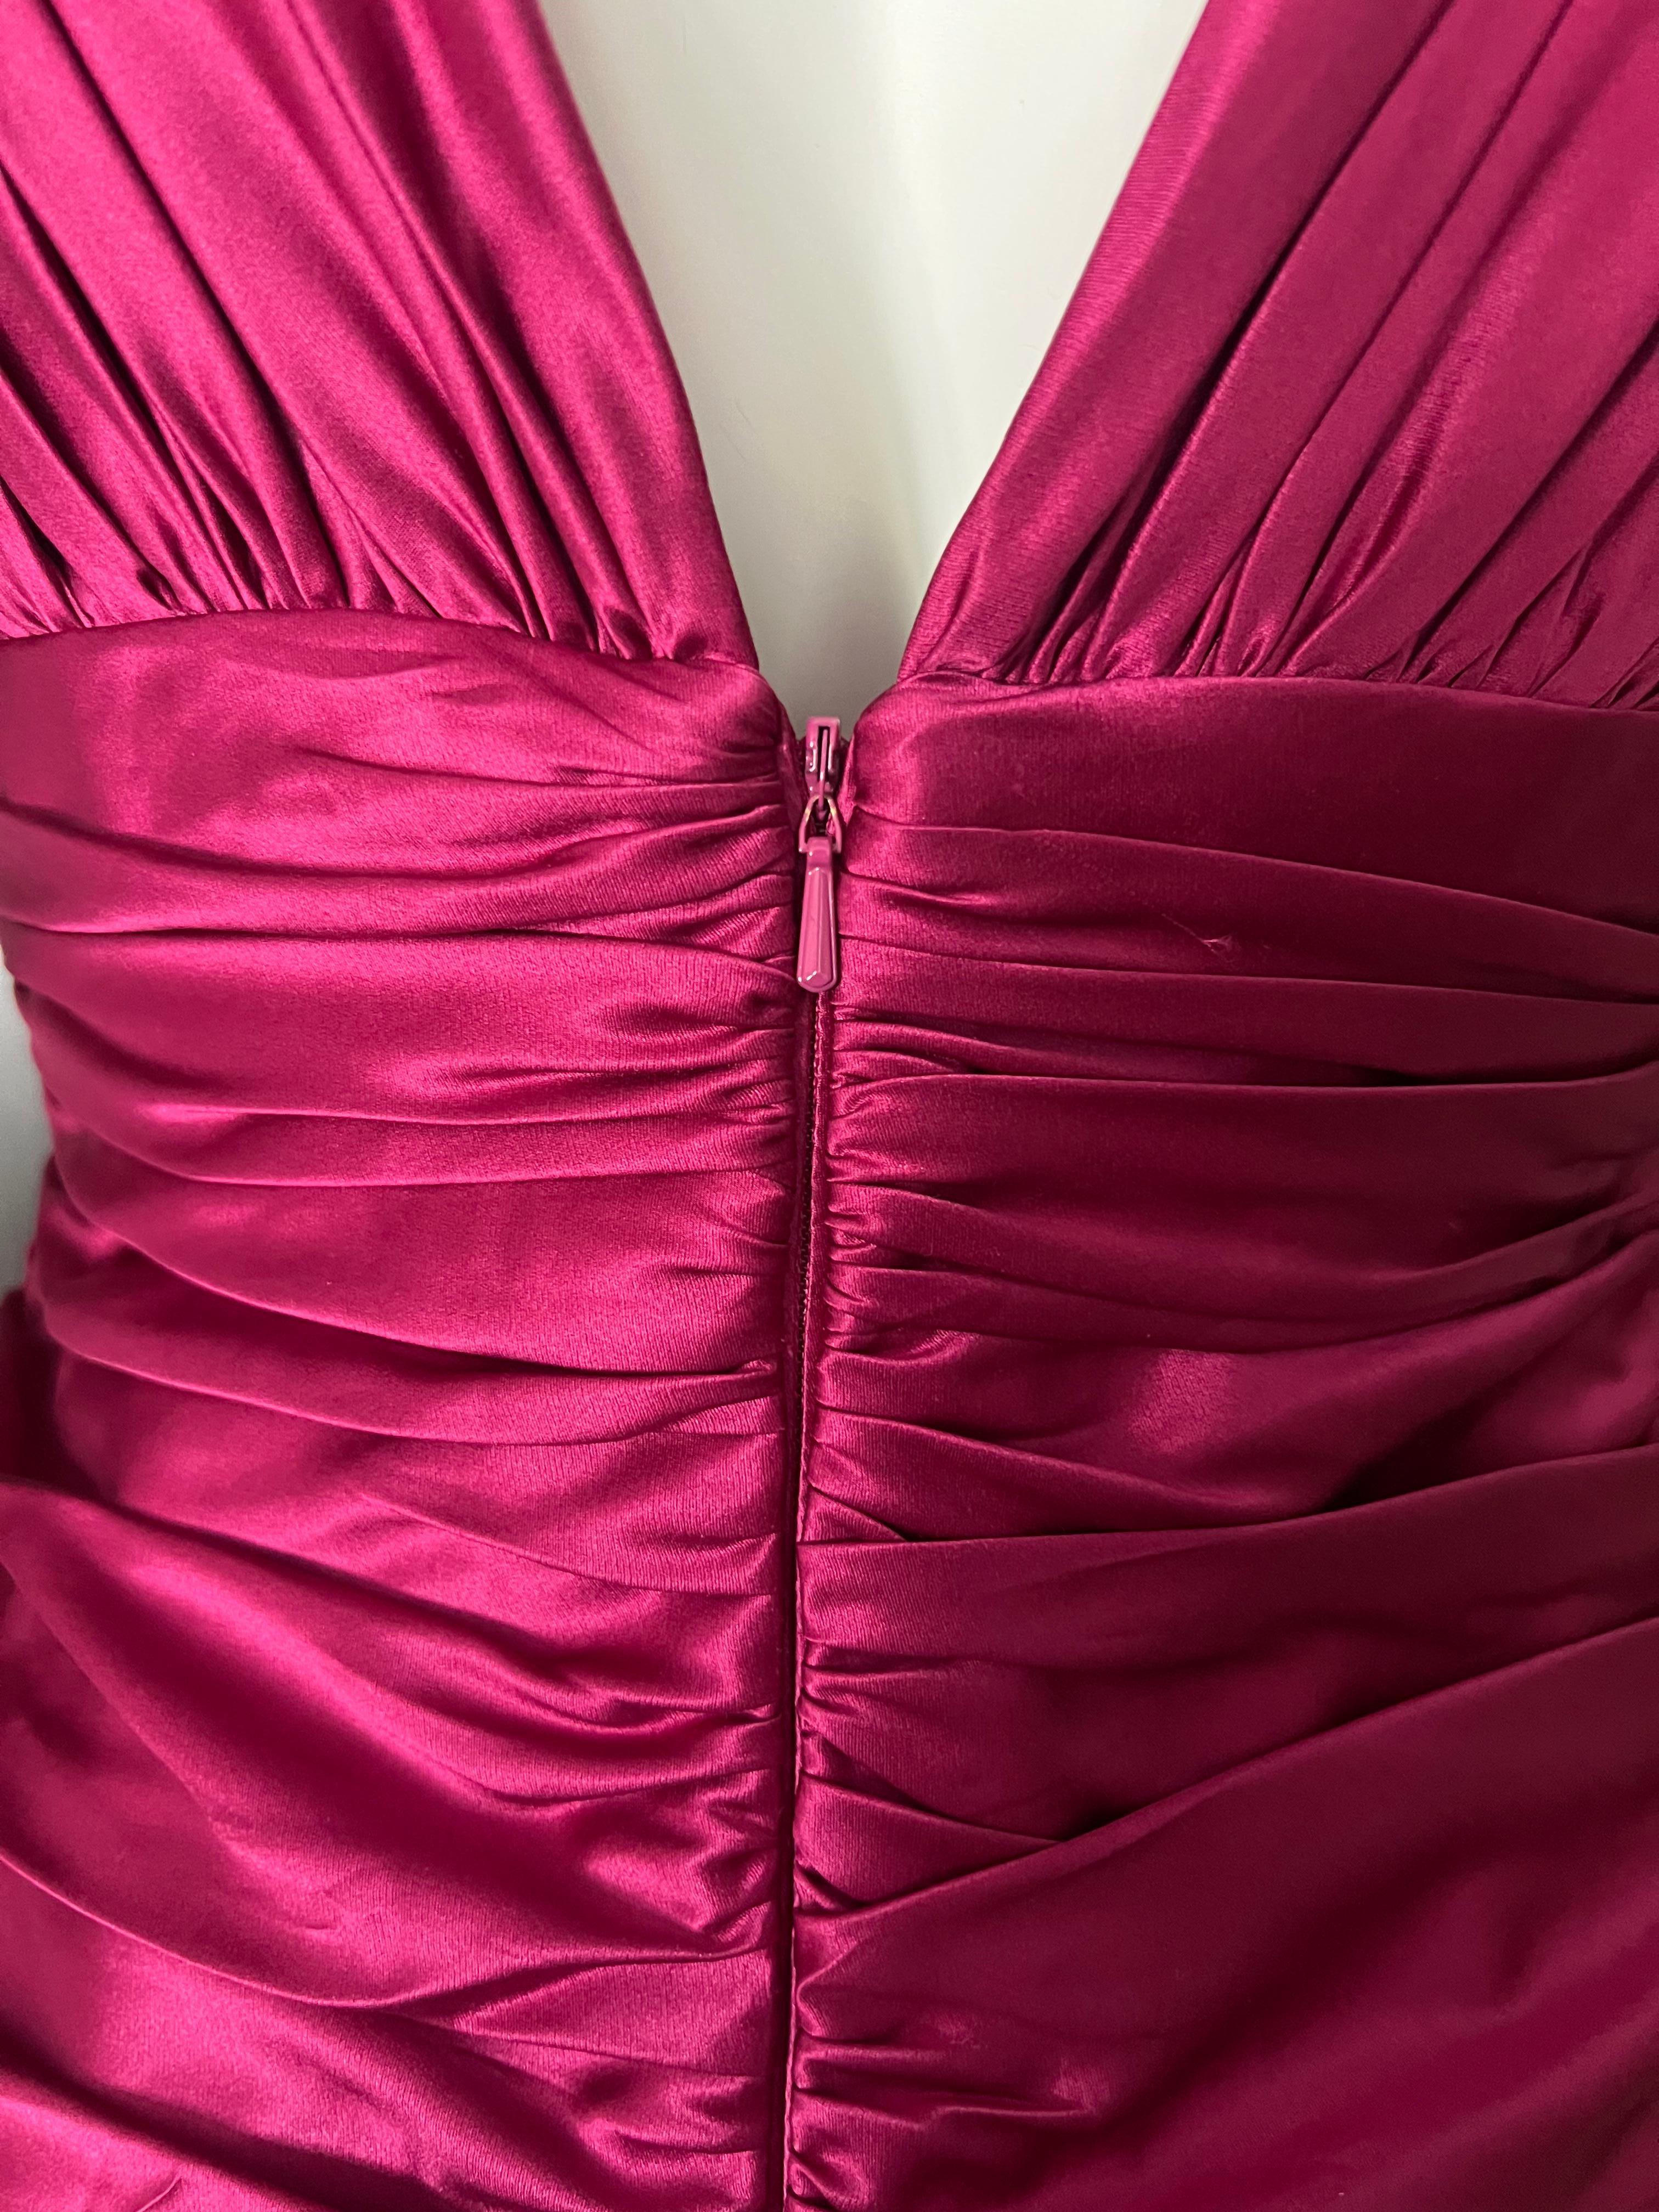 Carmen Marc Valvo Pink Silk Mini Dress, Size 8 For Sale 1